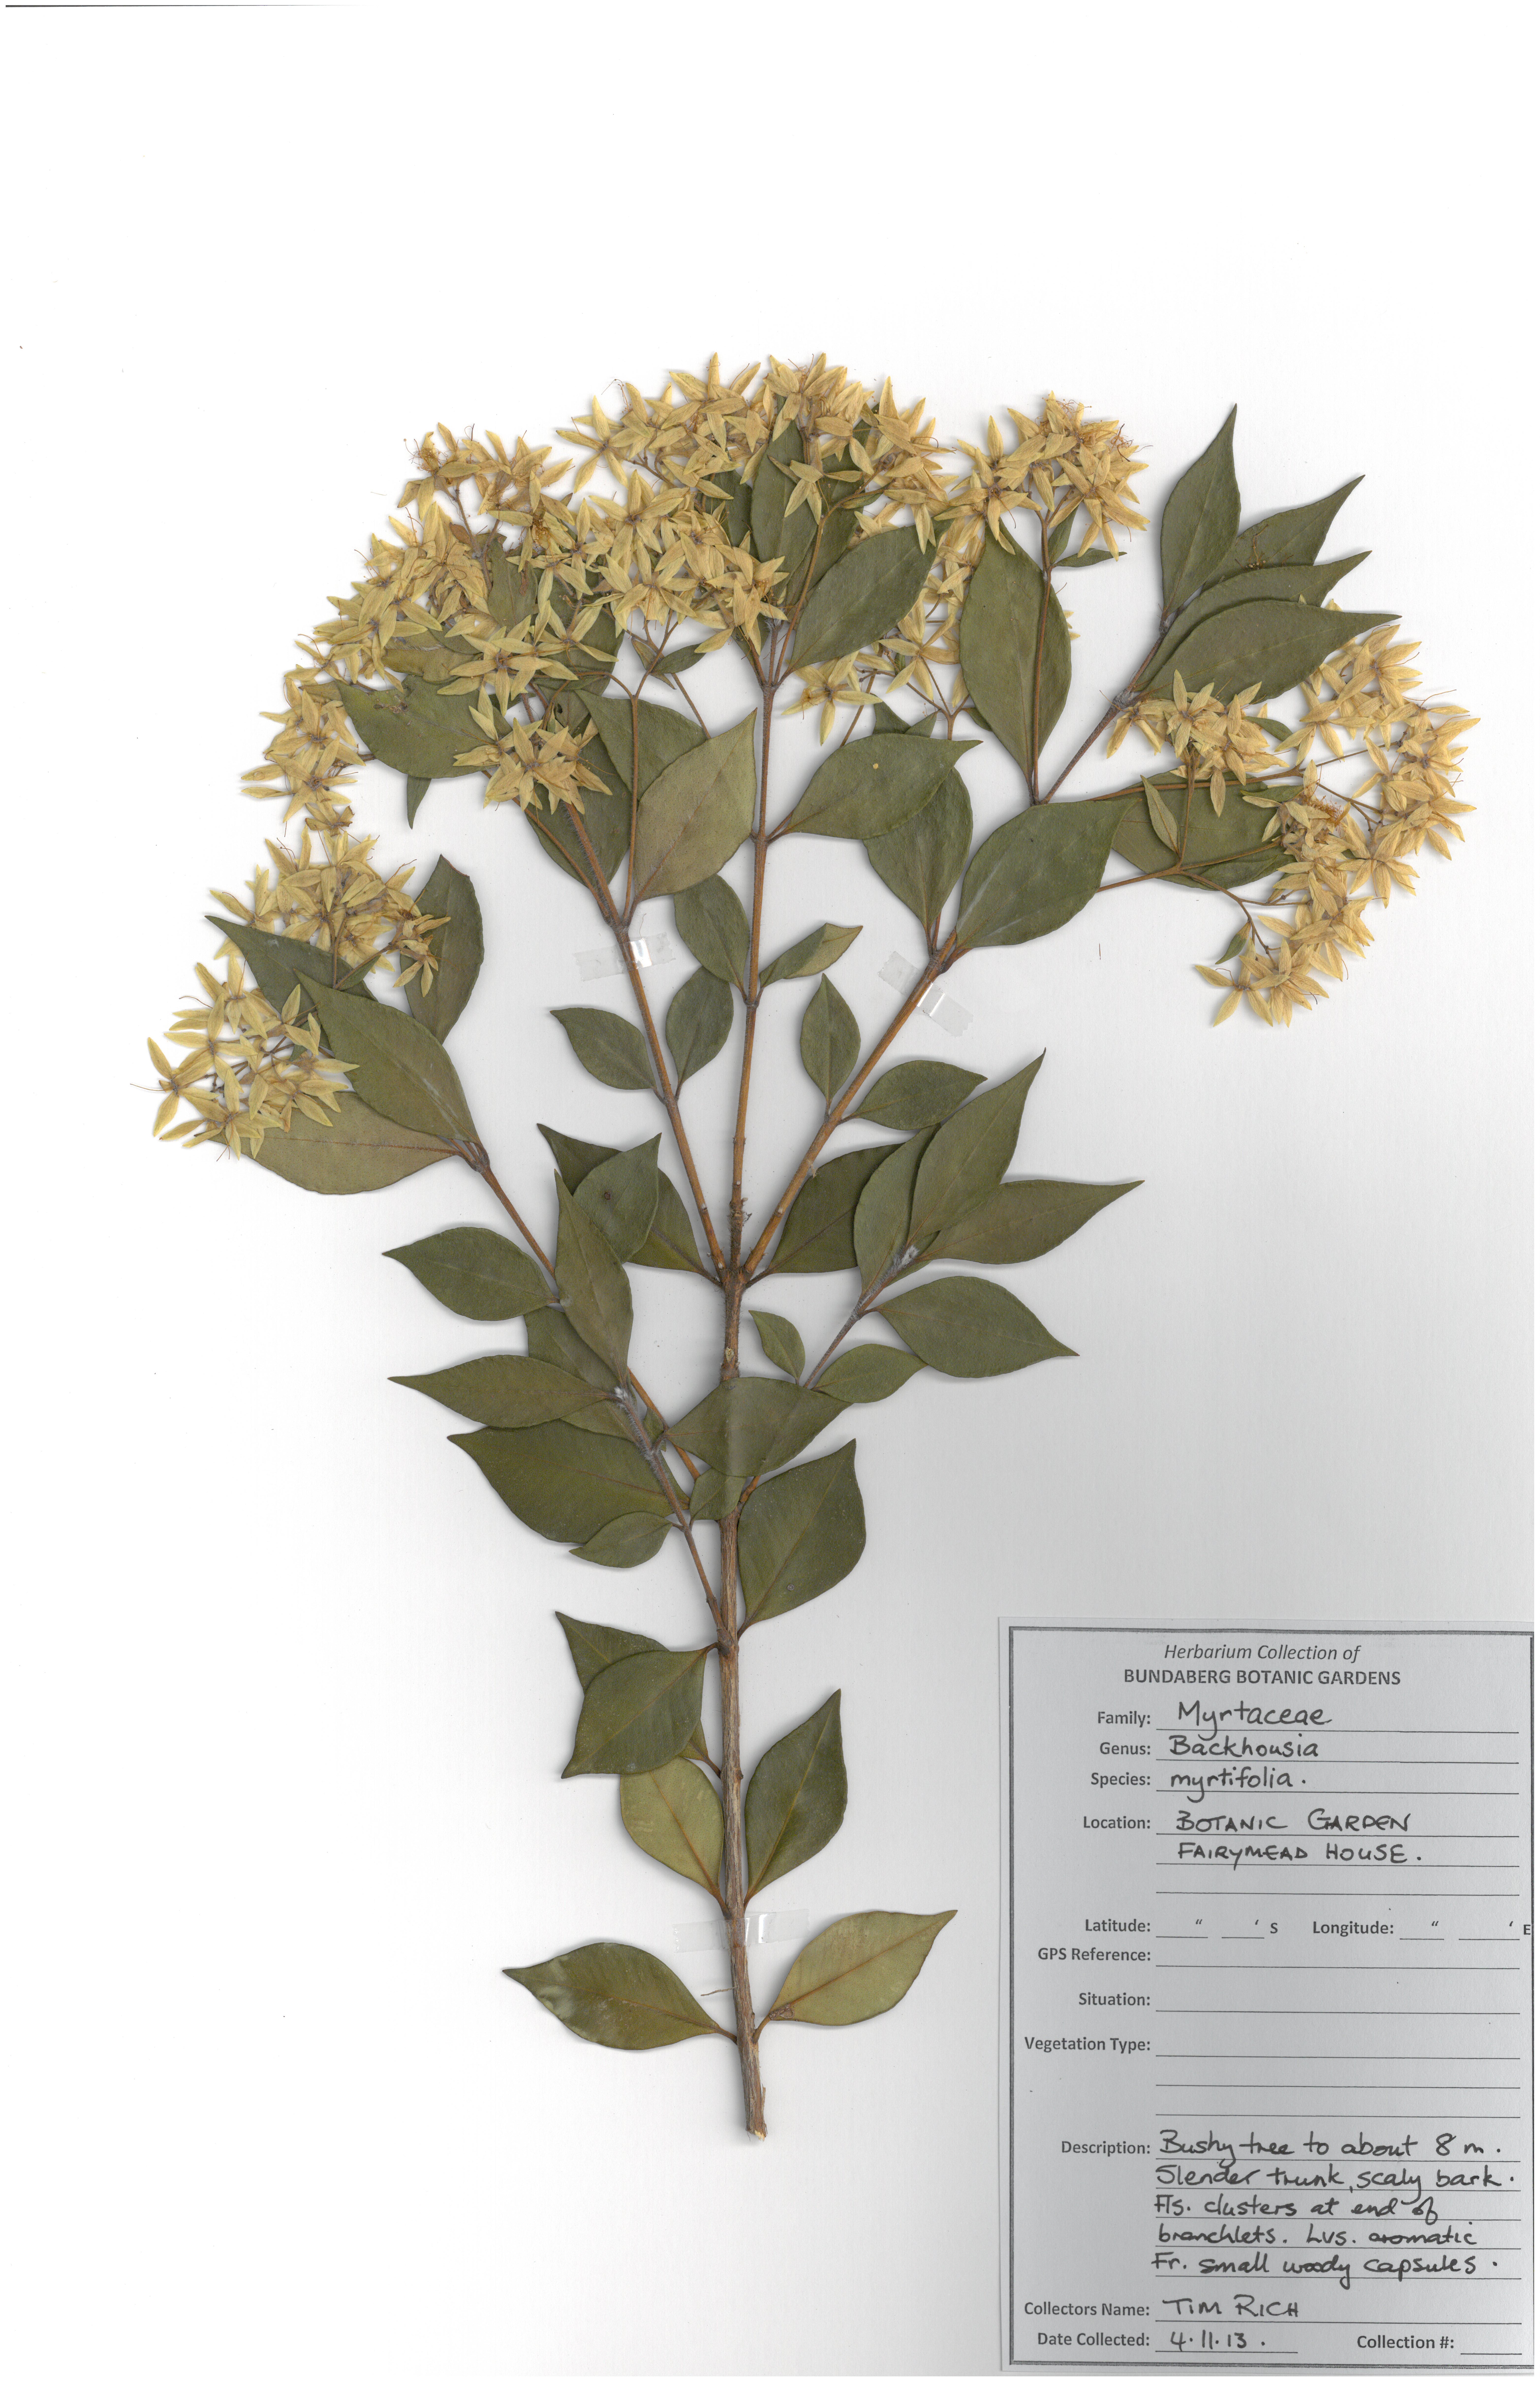 Myrtaceae backhousia mytifolia